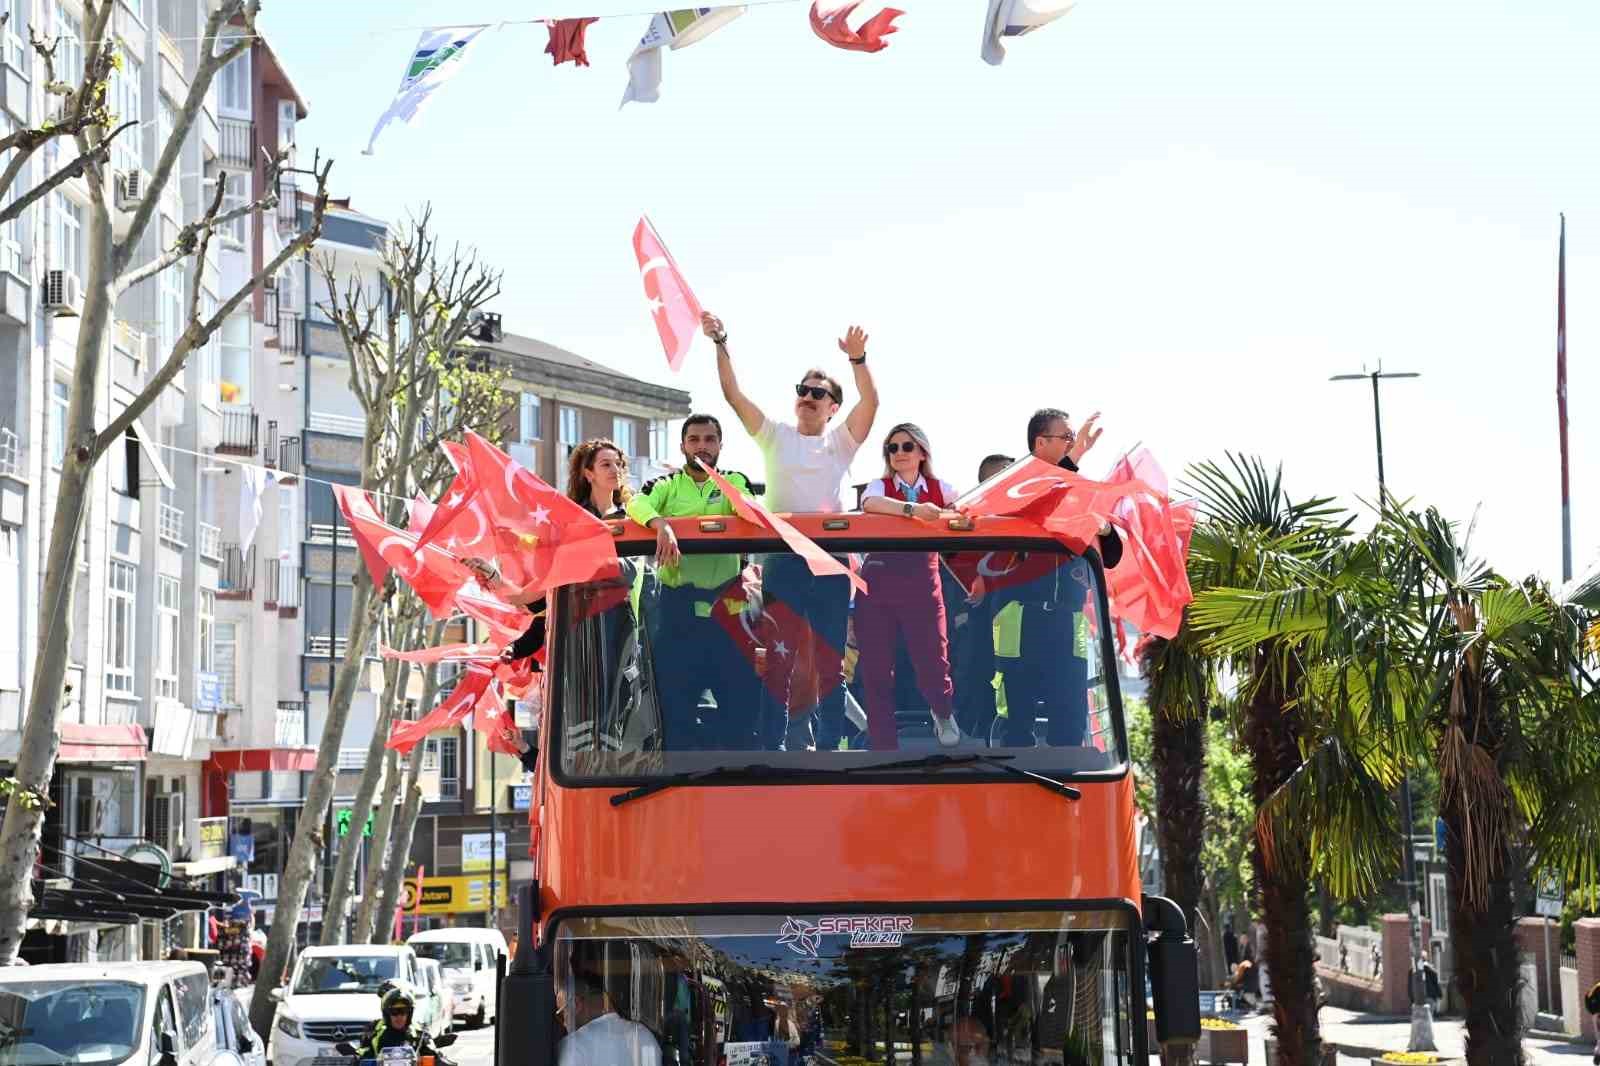 bahcelievler belediye baskani dr hakan bahadir turk bayraklariyla tesekkur turu atti 3 4qg5HBuB